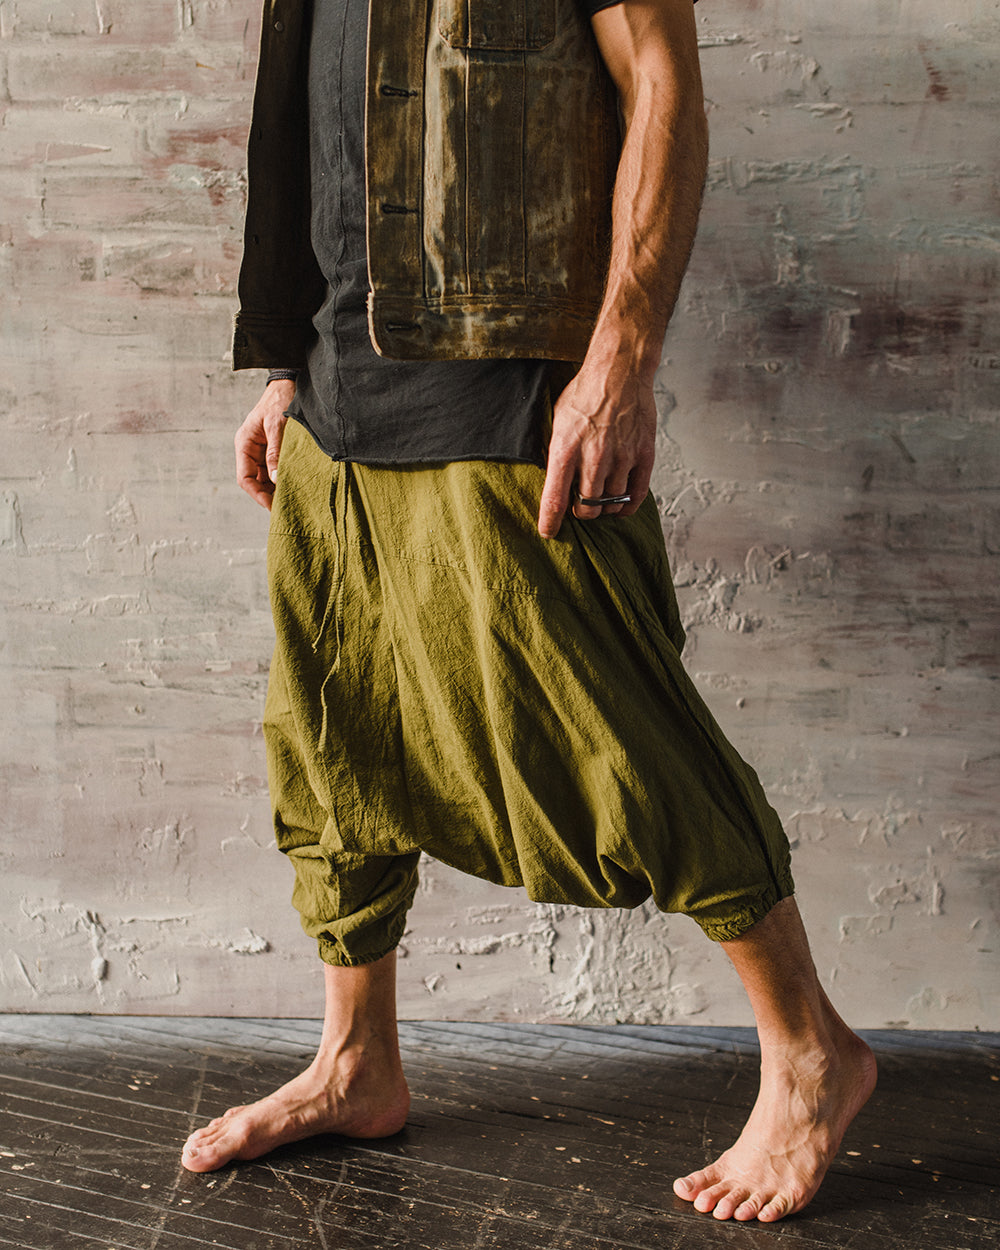 Unisex genie pants by Buddha | Seven Organic colors